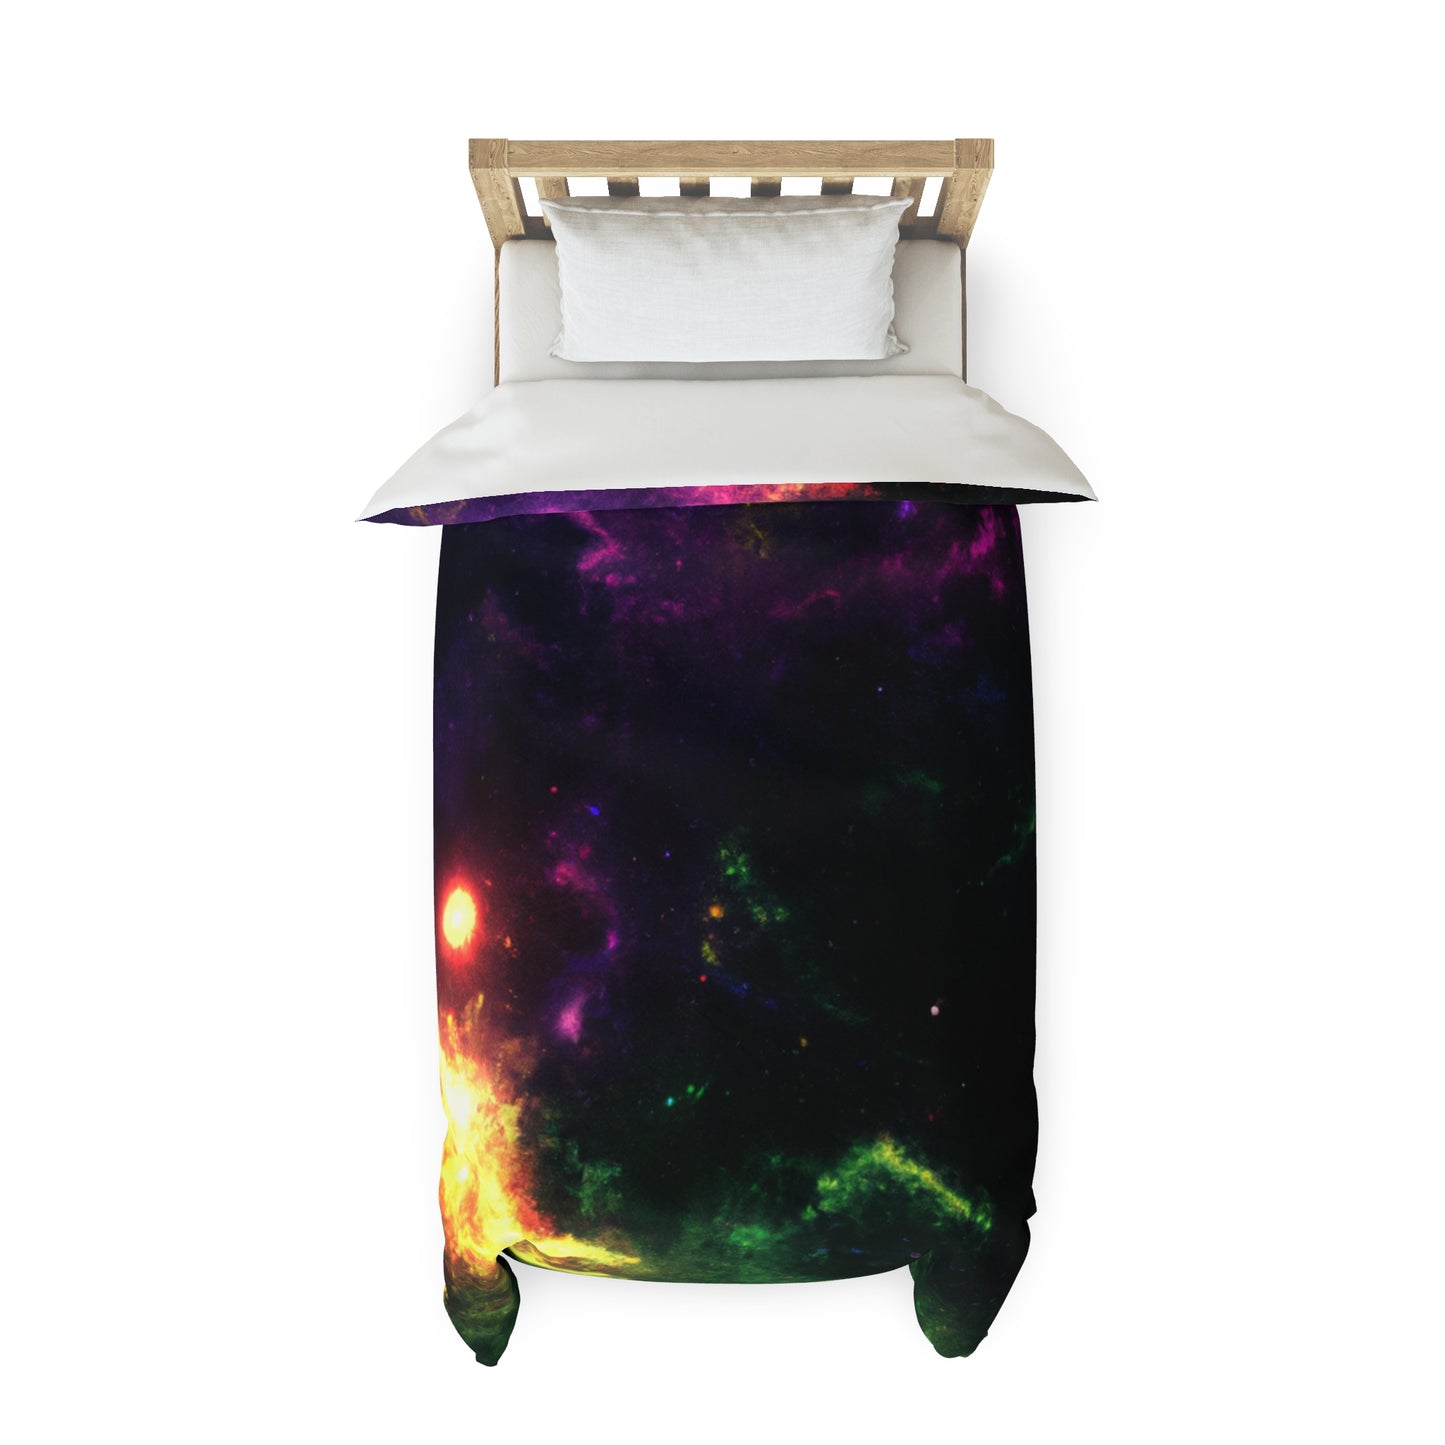 Dreamy Daisy - Astronomy Duvet Bed Cover